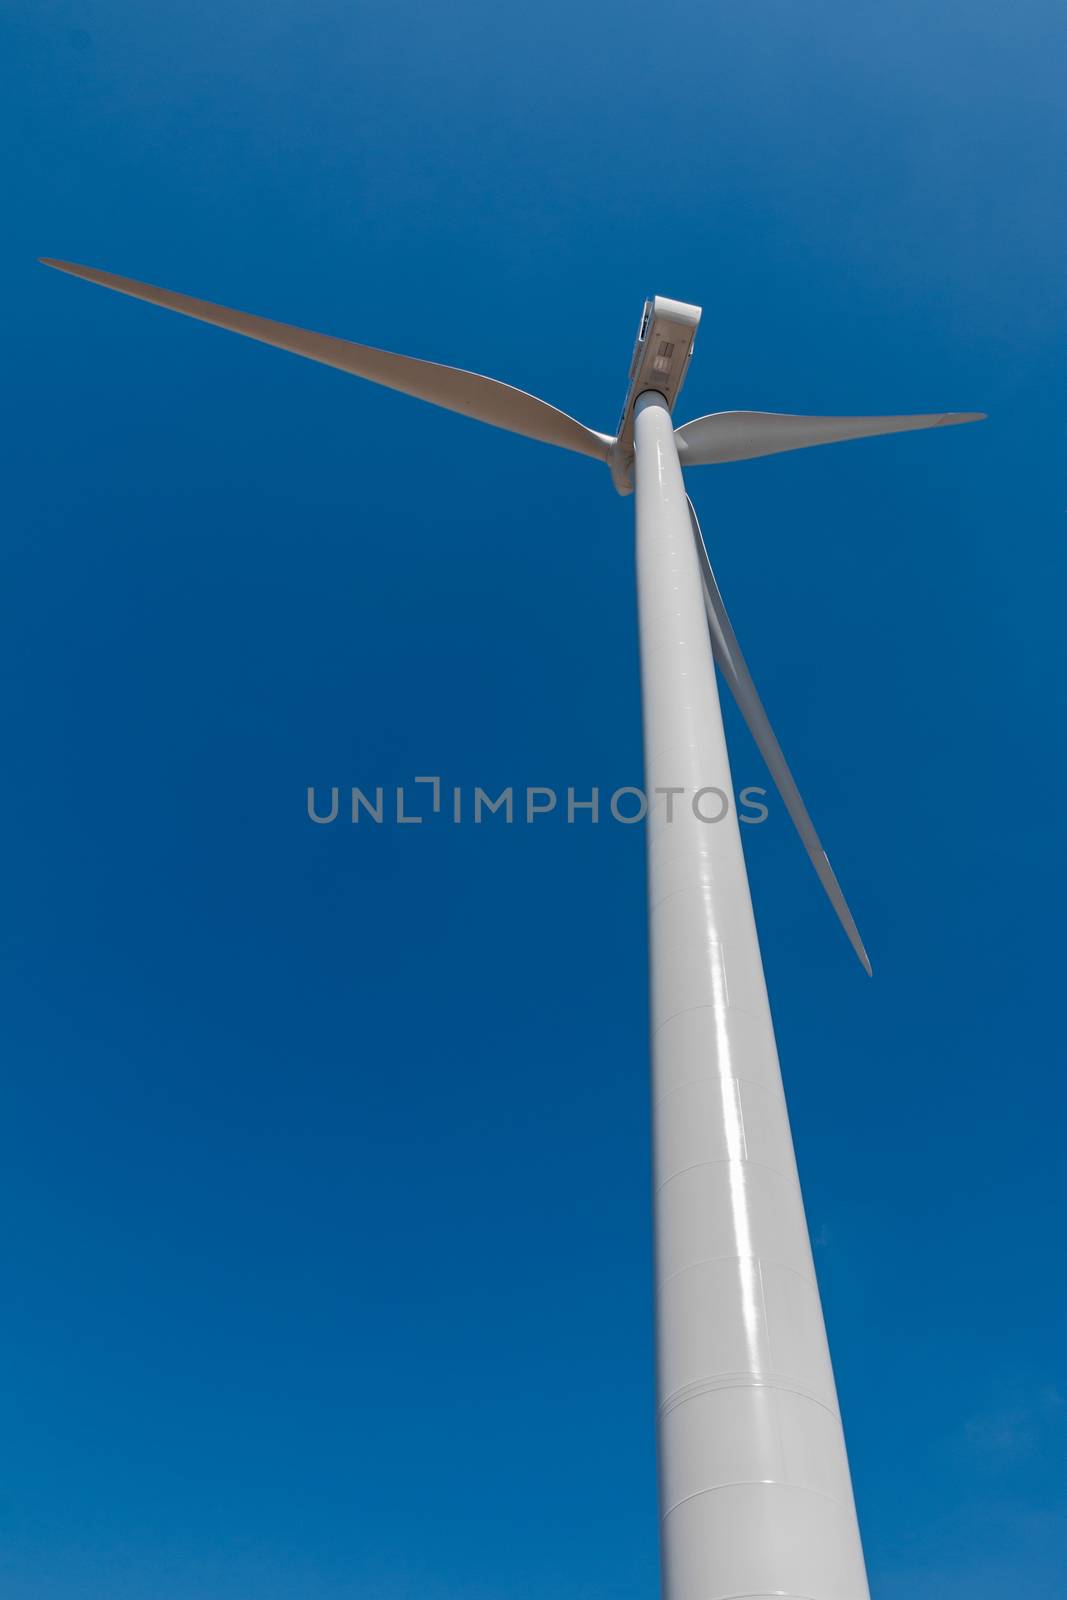 perspective of wind turbine in blue sky